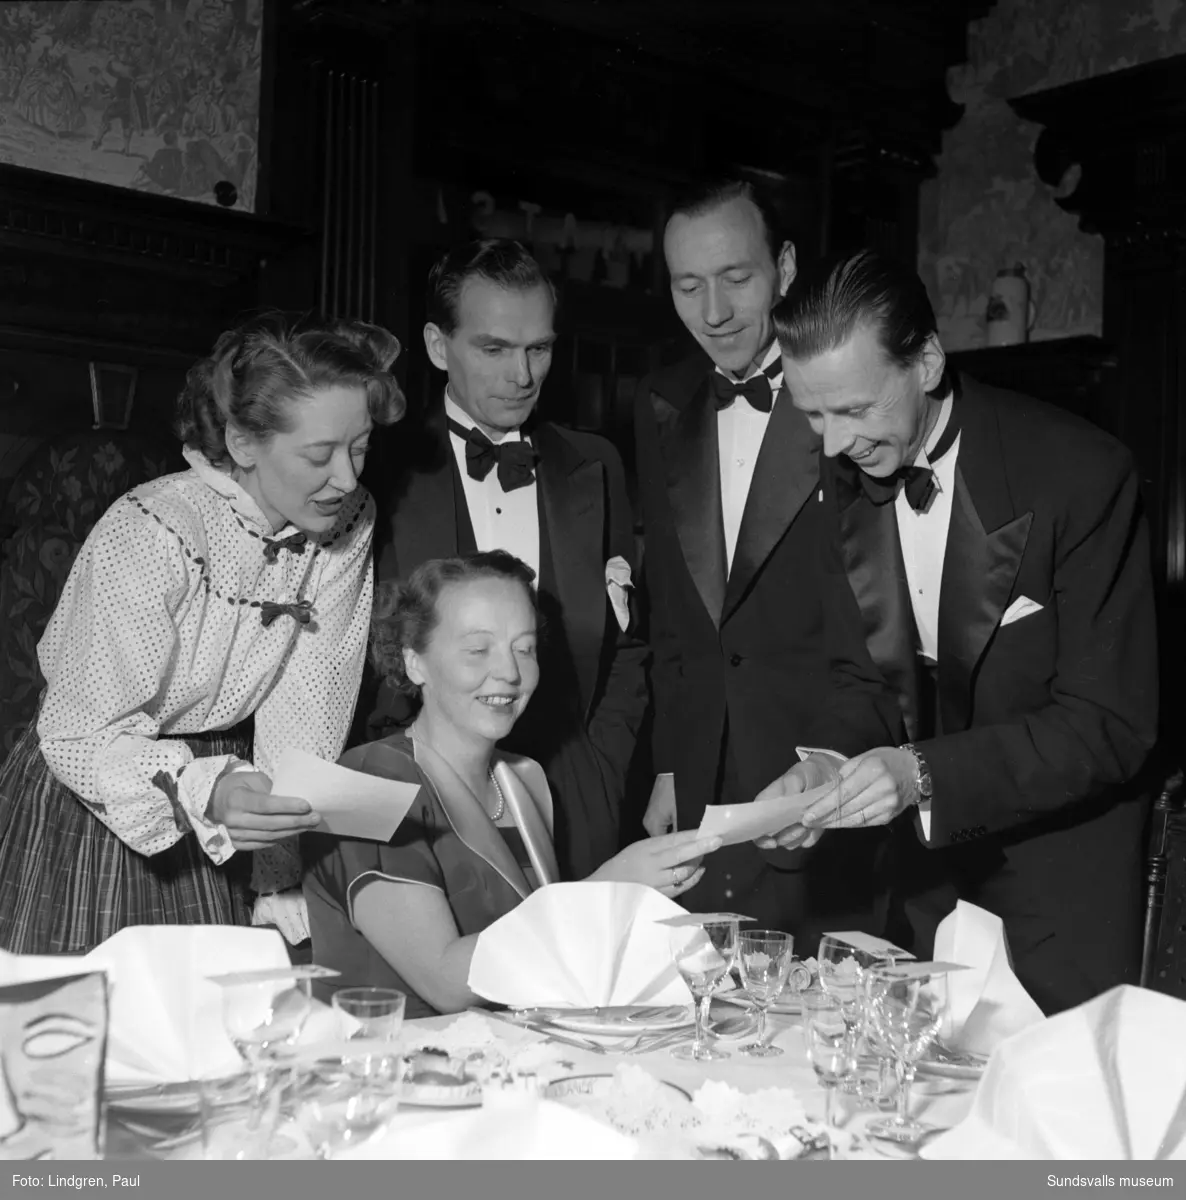 Den nybildade tjänstemannaklubben på Stockviksverken på festligheter i Knaust hotells lokaler. På bilden ses ingenjörerna Strandberg, Bergstedt och Norlinder med fruar.